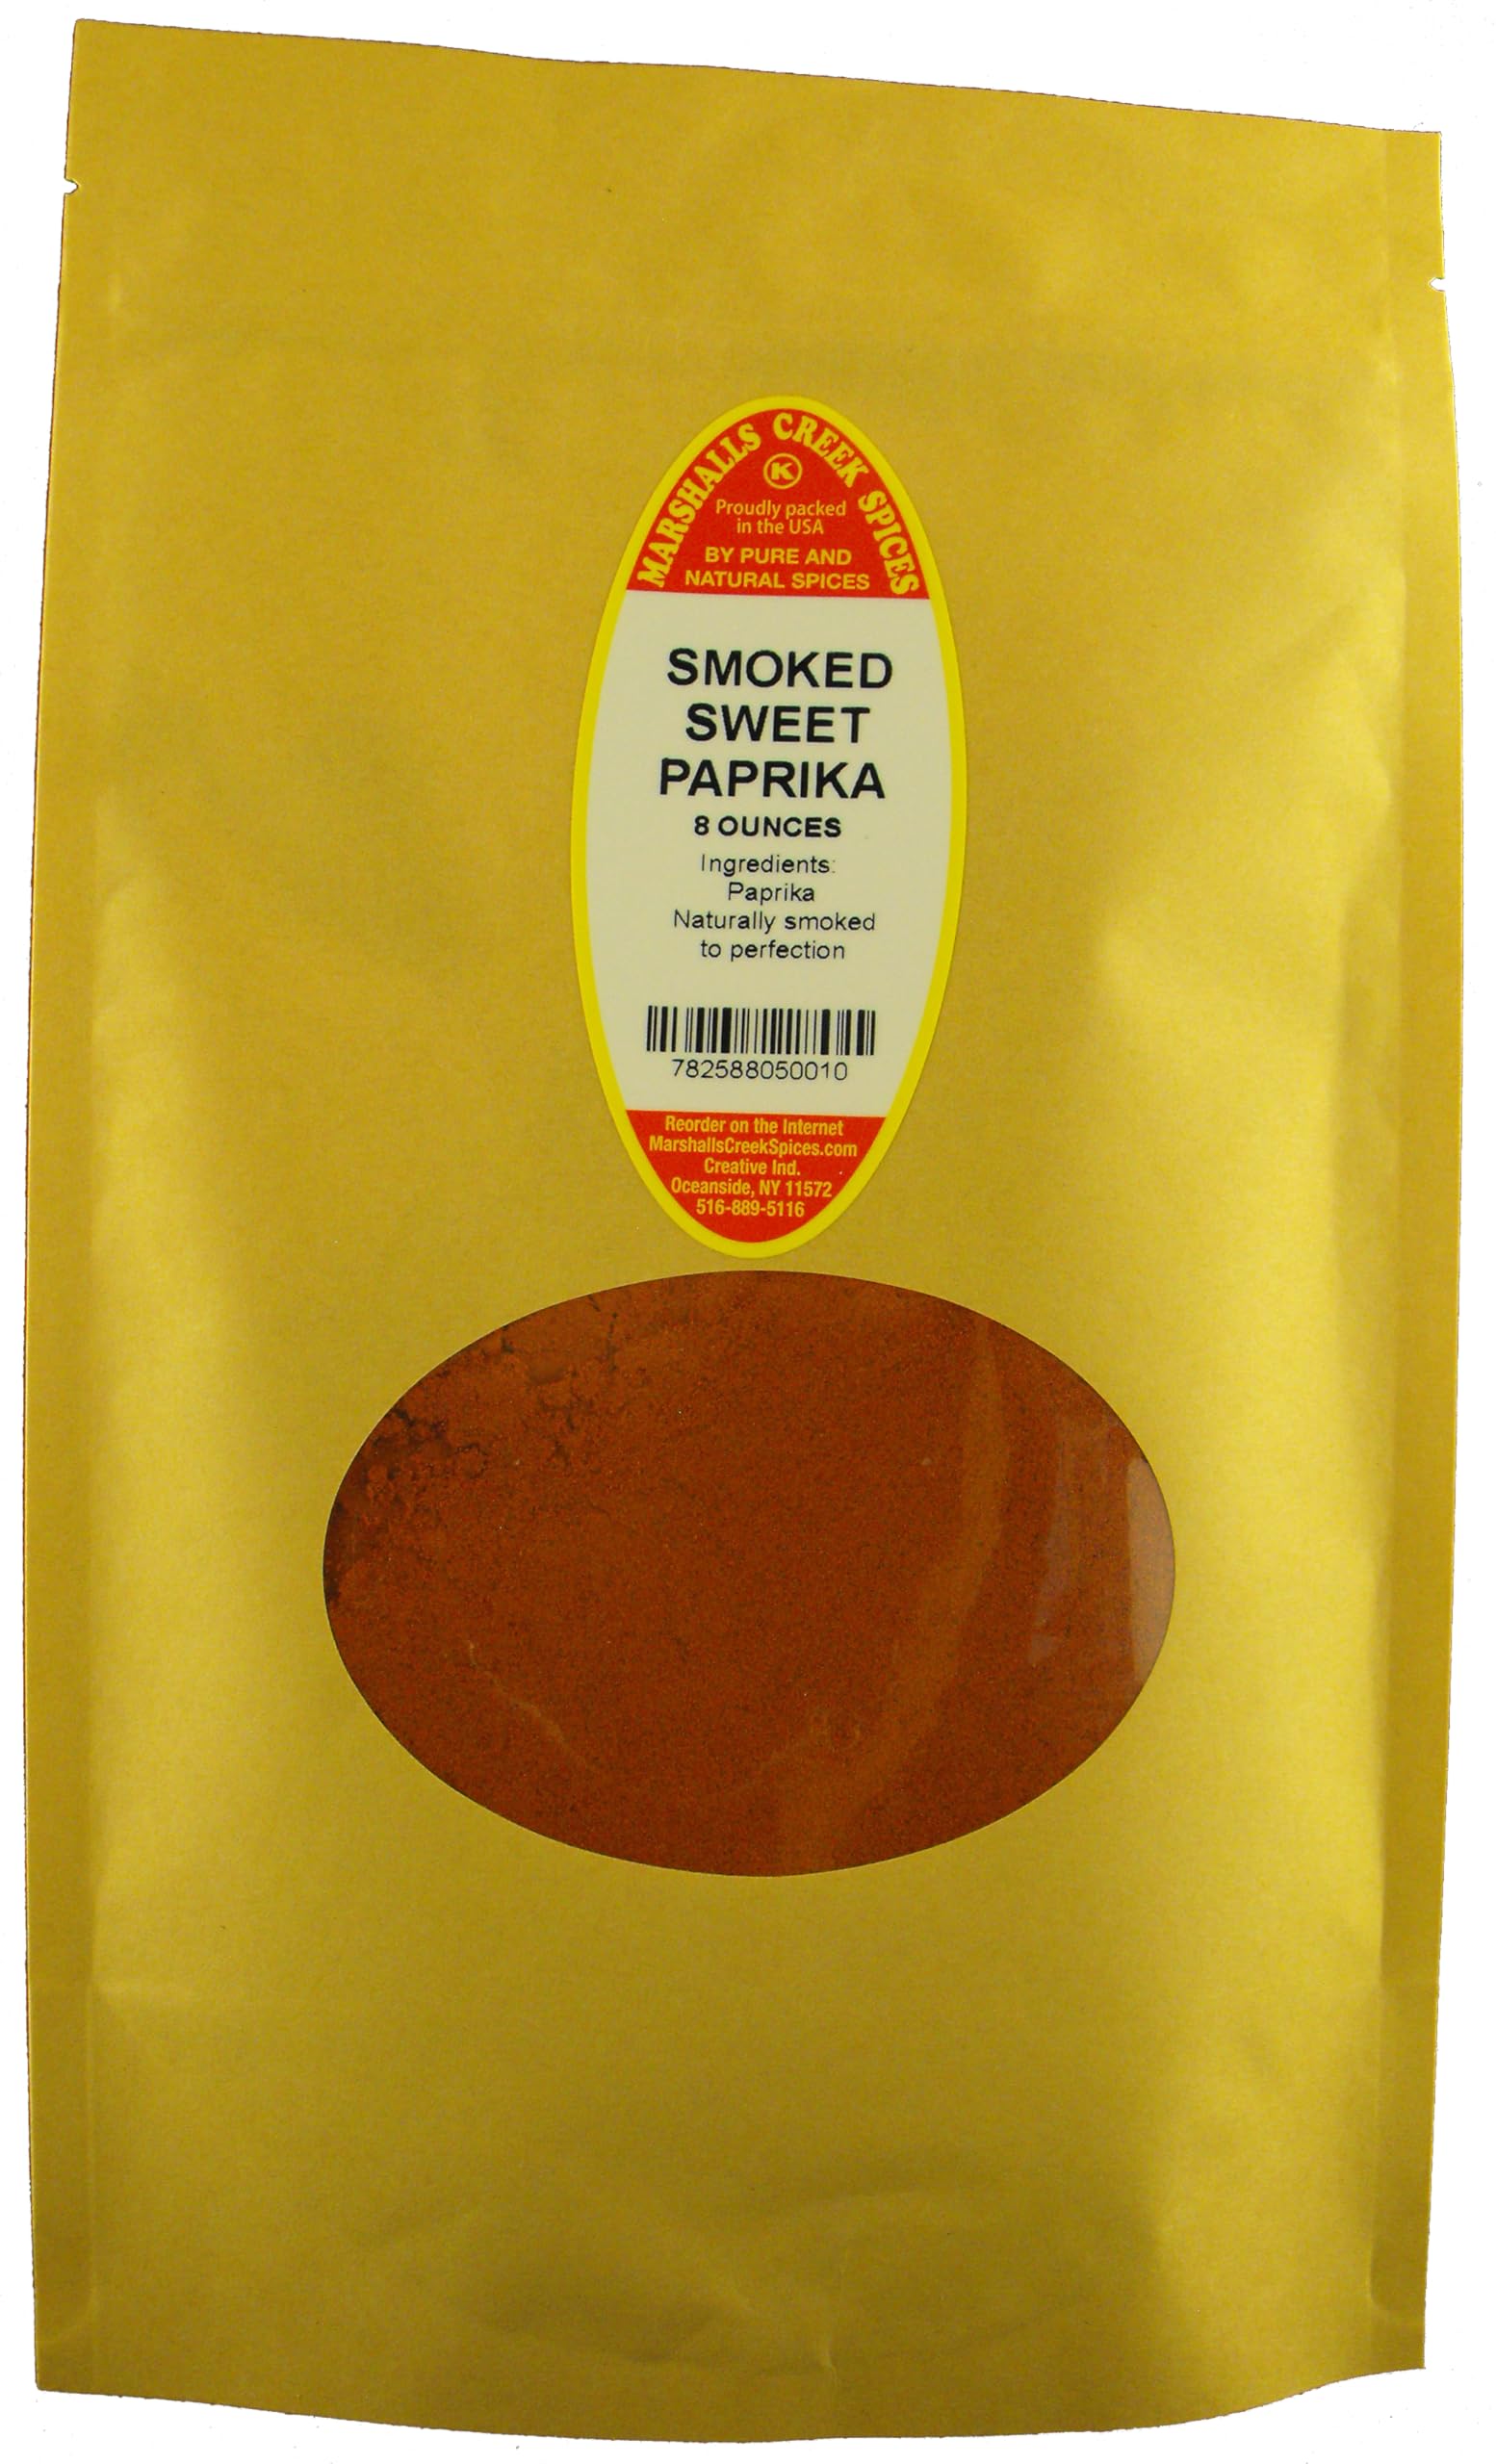 8oz Marshalls Creek Spices Smoked Sweet Paprika $4.75 @ Amazon